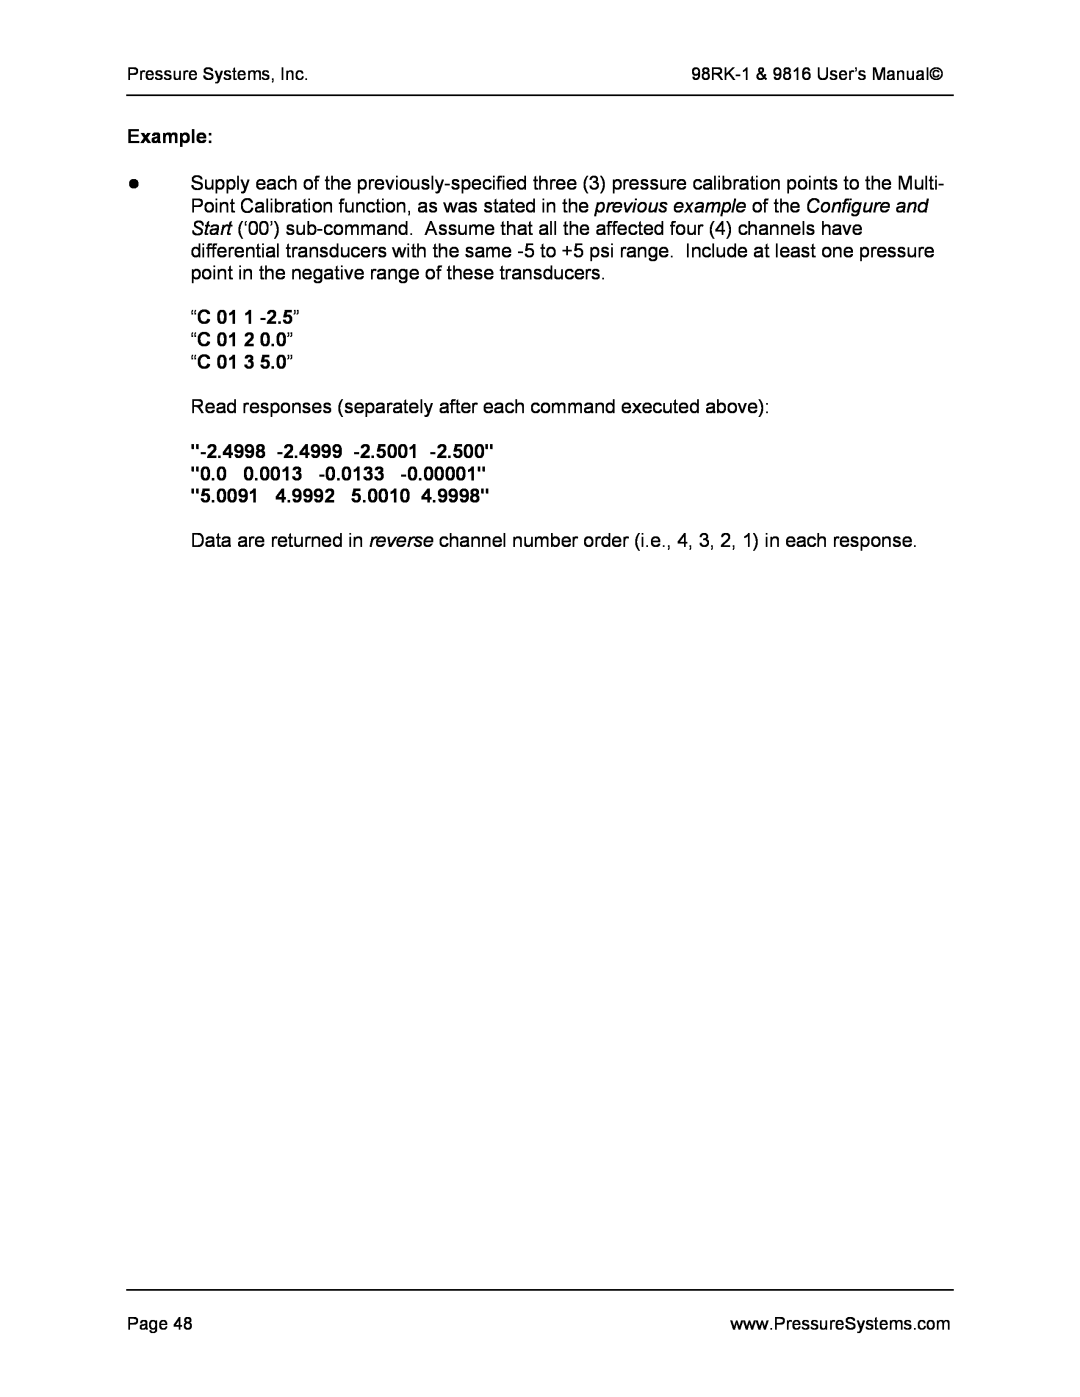 Pressure Systems 98RK-1 user manual Example, “C 01 1 -2.5” “C 01 2 0.0” “C 01 3 5.0” 